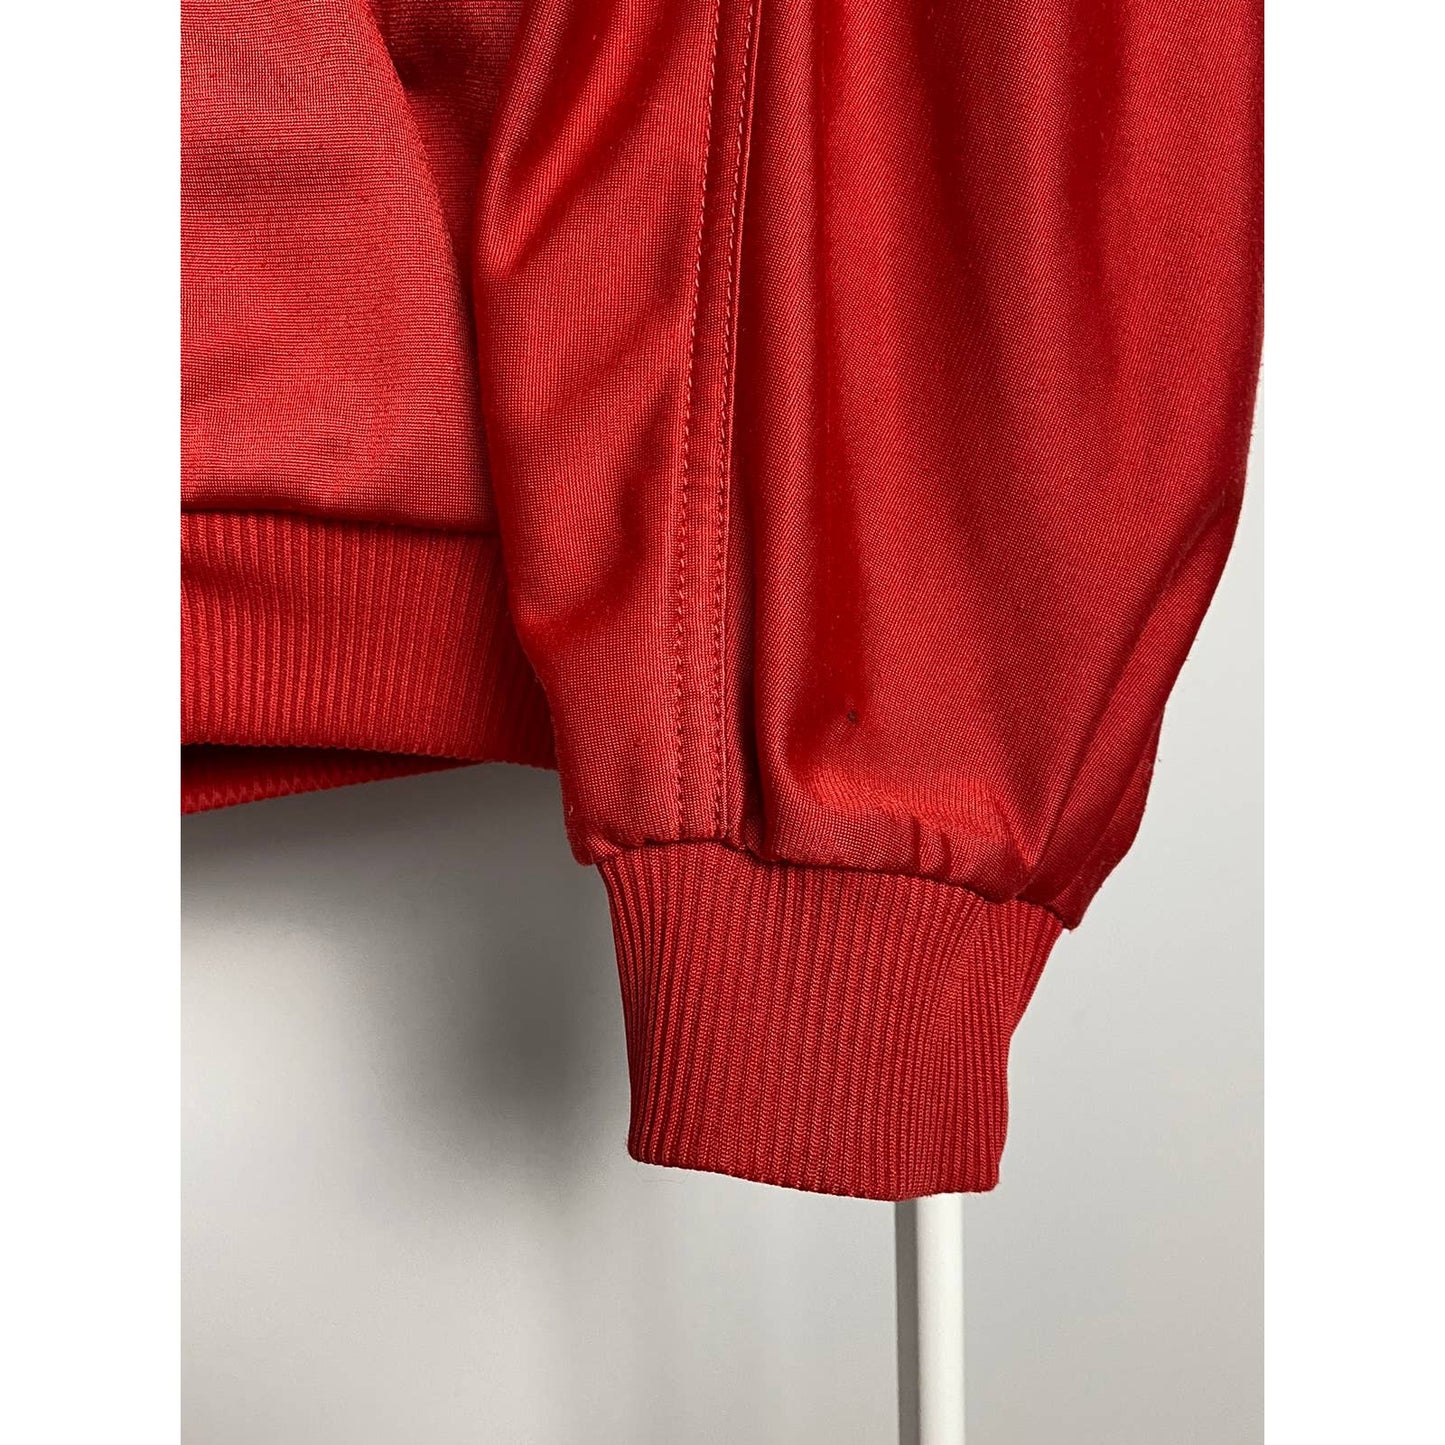 90s Nike vintage red track jacket zip sweatshirt big swoosh